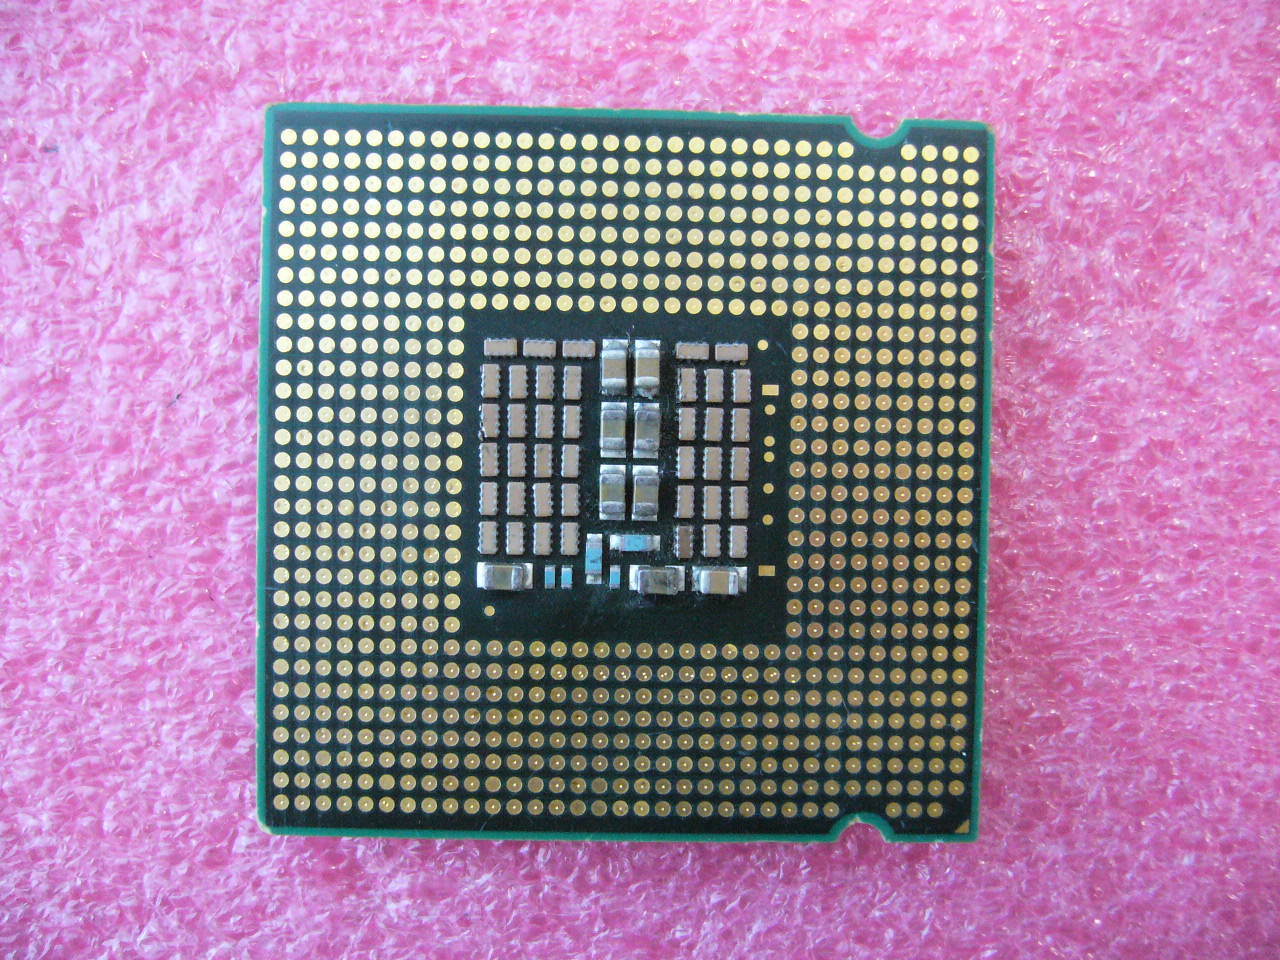 QTY 1x INTEL Quad Cores Q9550 CPU 2.83GHz/12MB/1333Mhz LGA775 SLB8V SLAWQ - zum Schließen ins Bild klicken